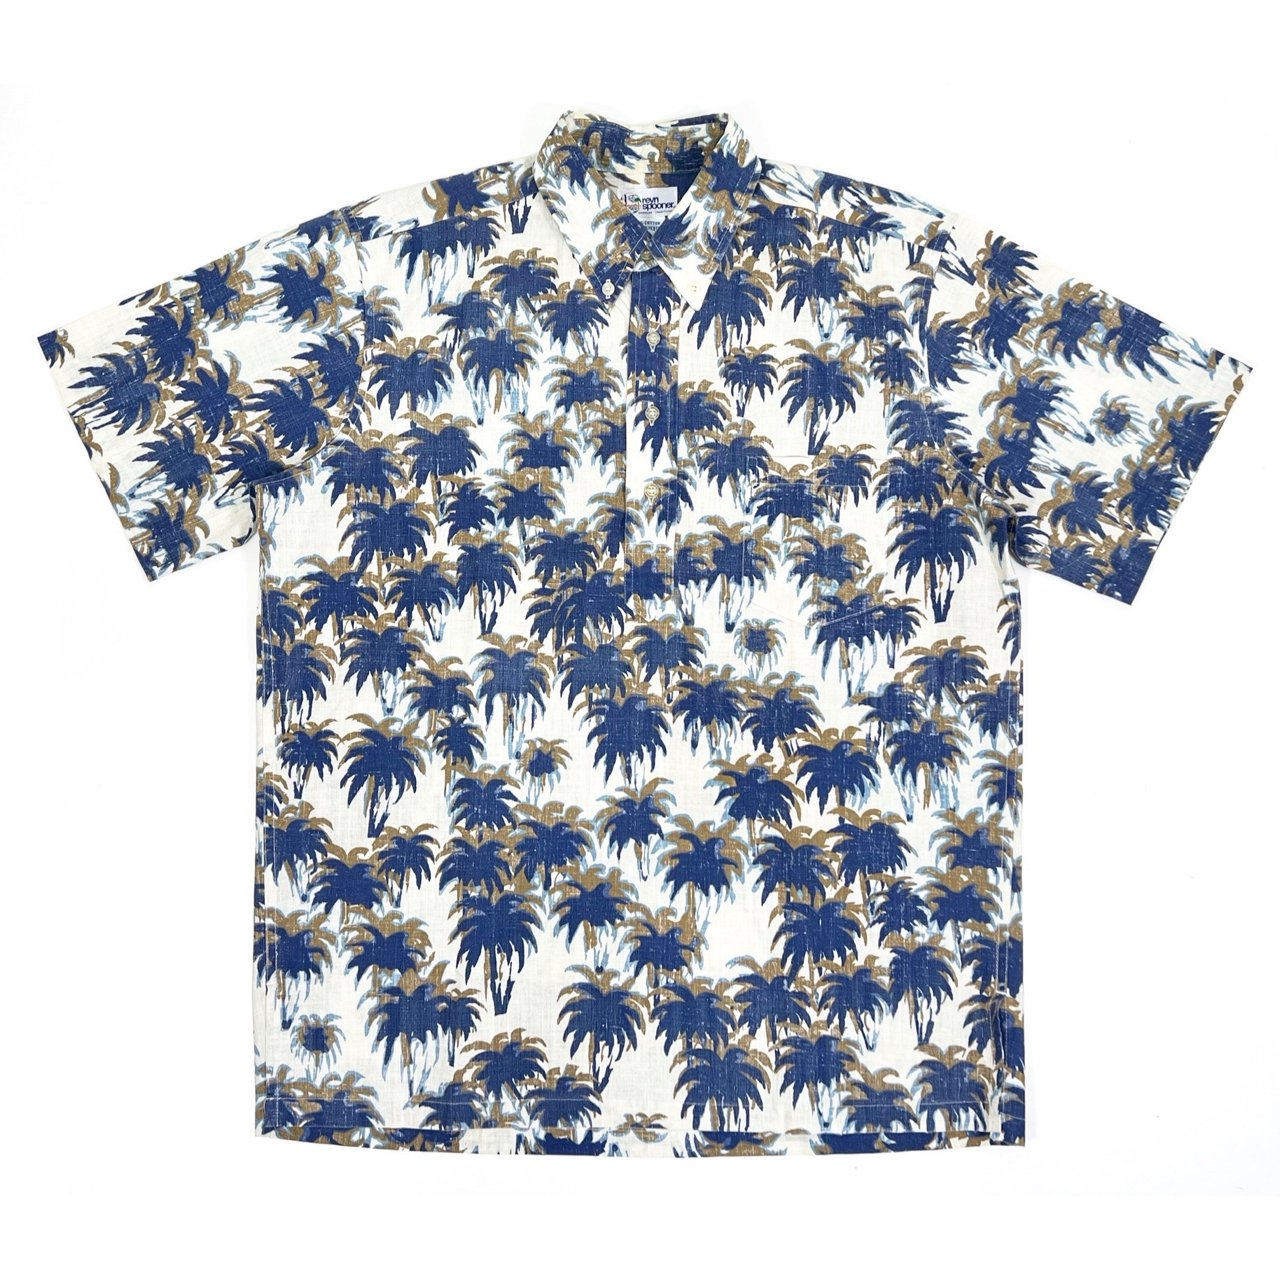 NOS 1990s reyn spooner Aloha shirts M TAILORED IN HAWAII